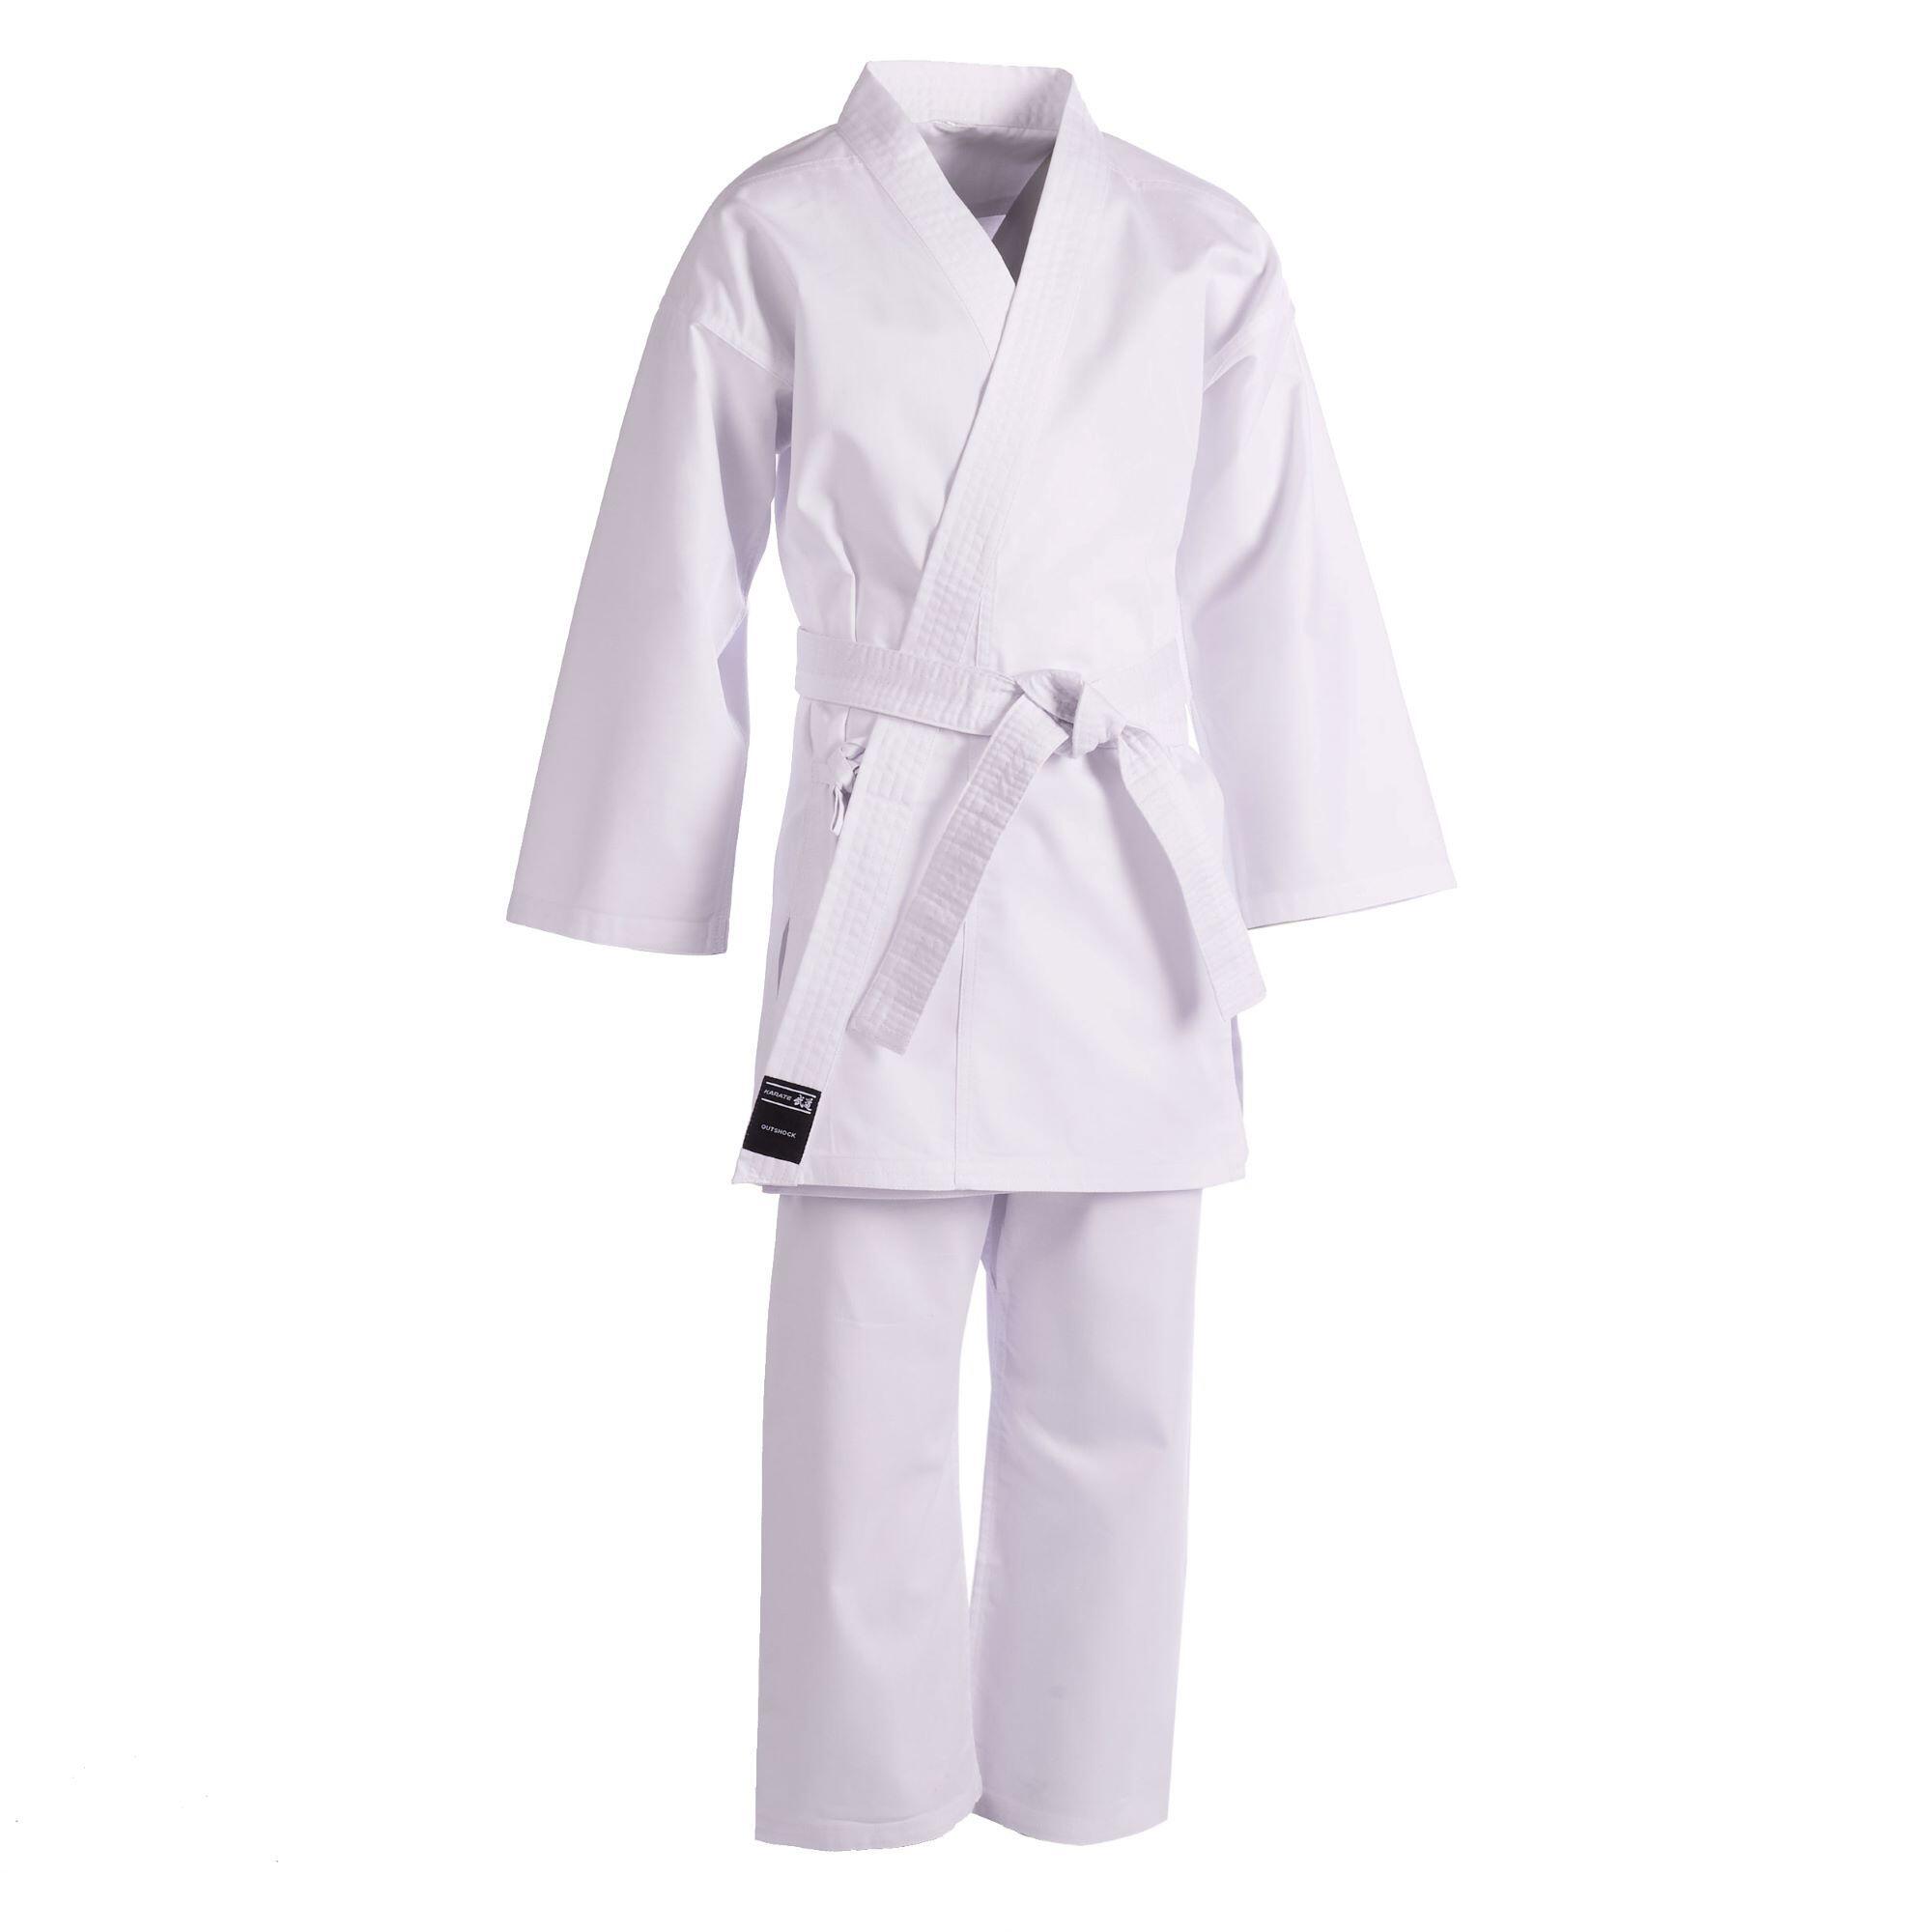 OUTSHOCK Decathlon - Kimono bambino karate 100 bianco -